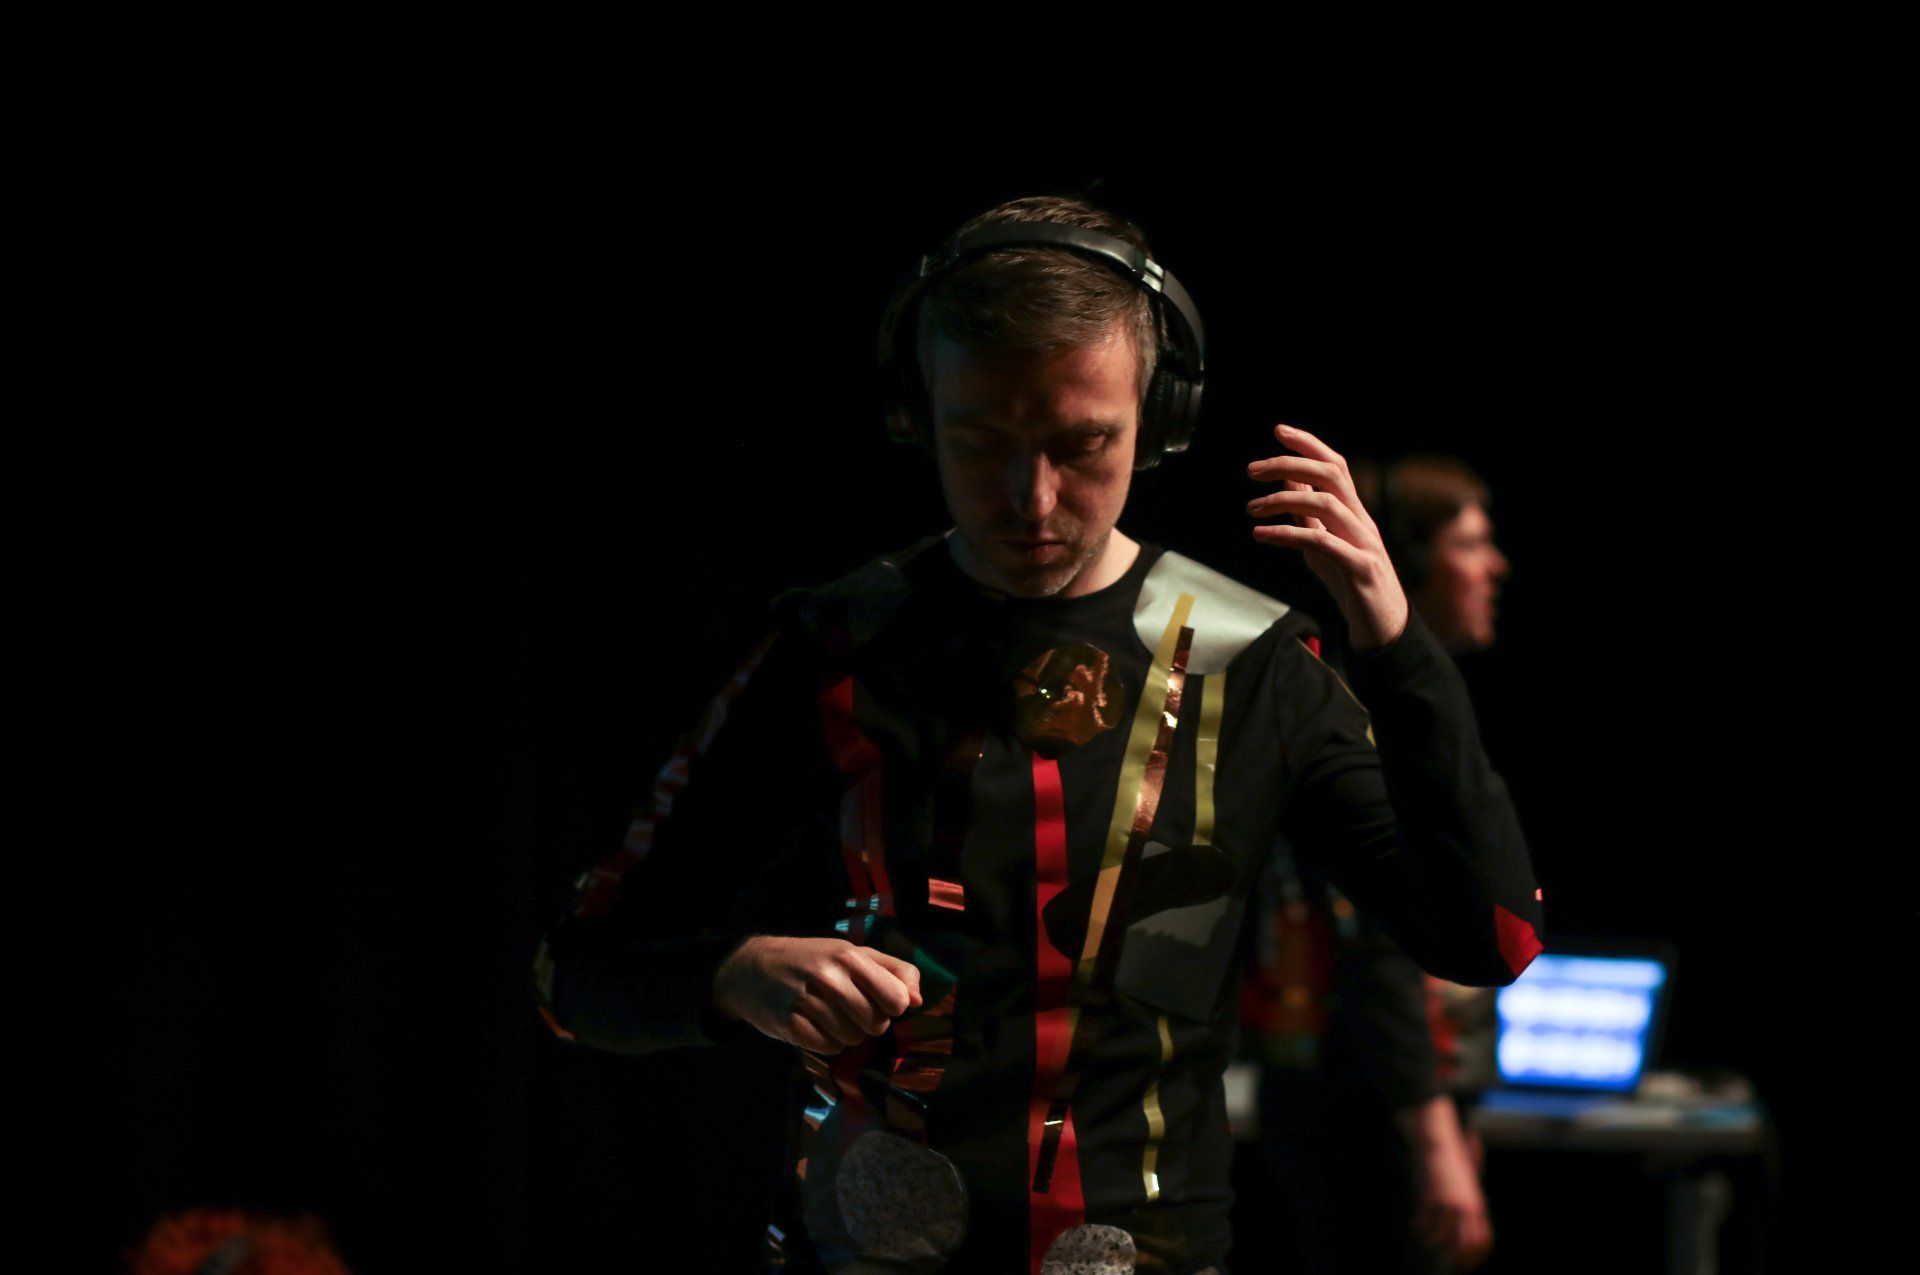 a man wearing headphones is standing in a dark room .